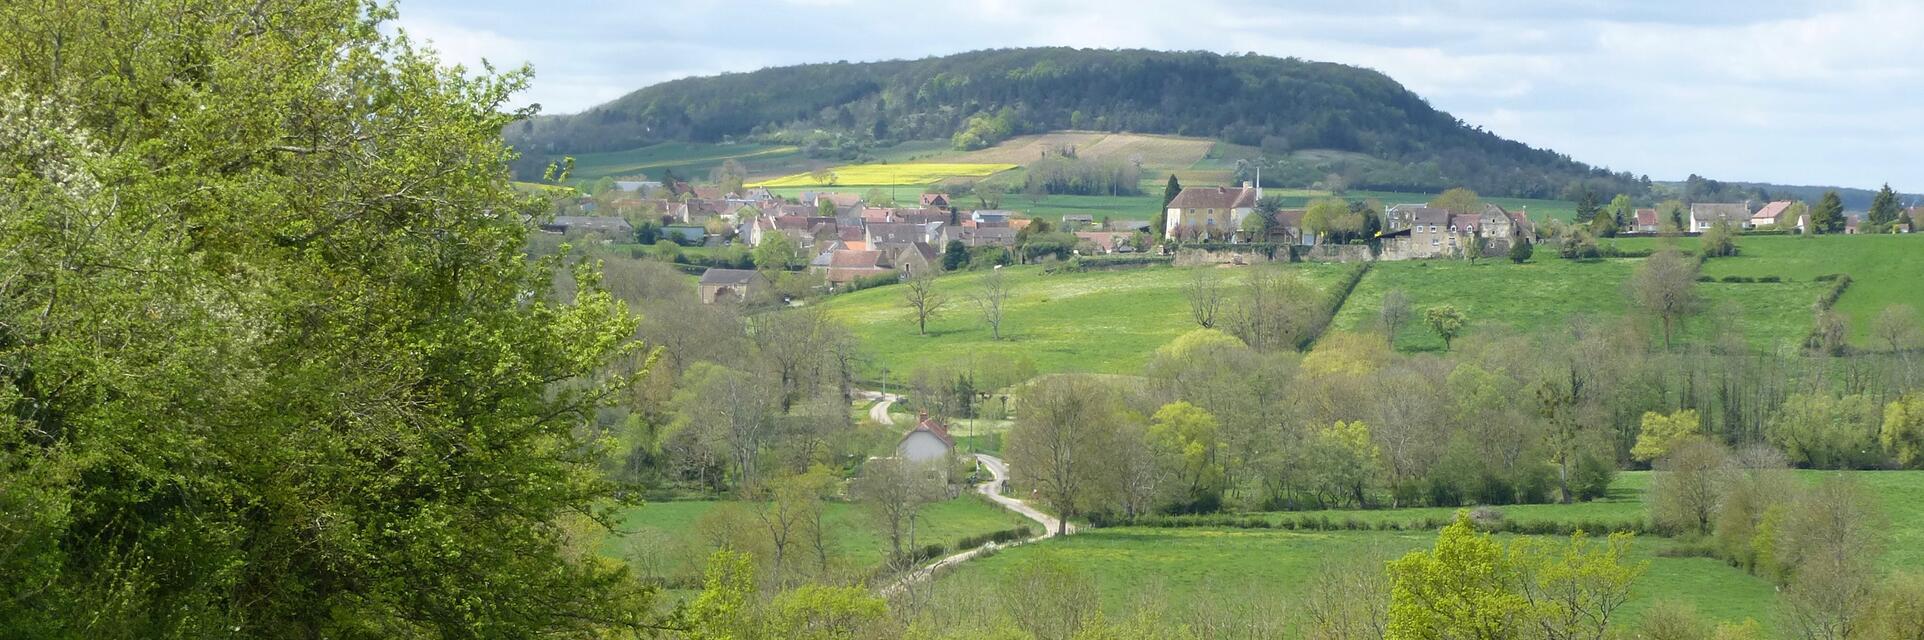 Yonne valley